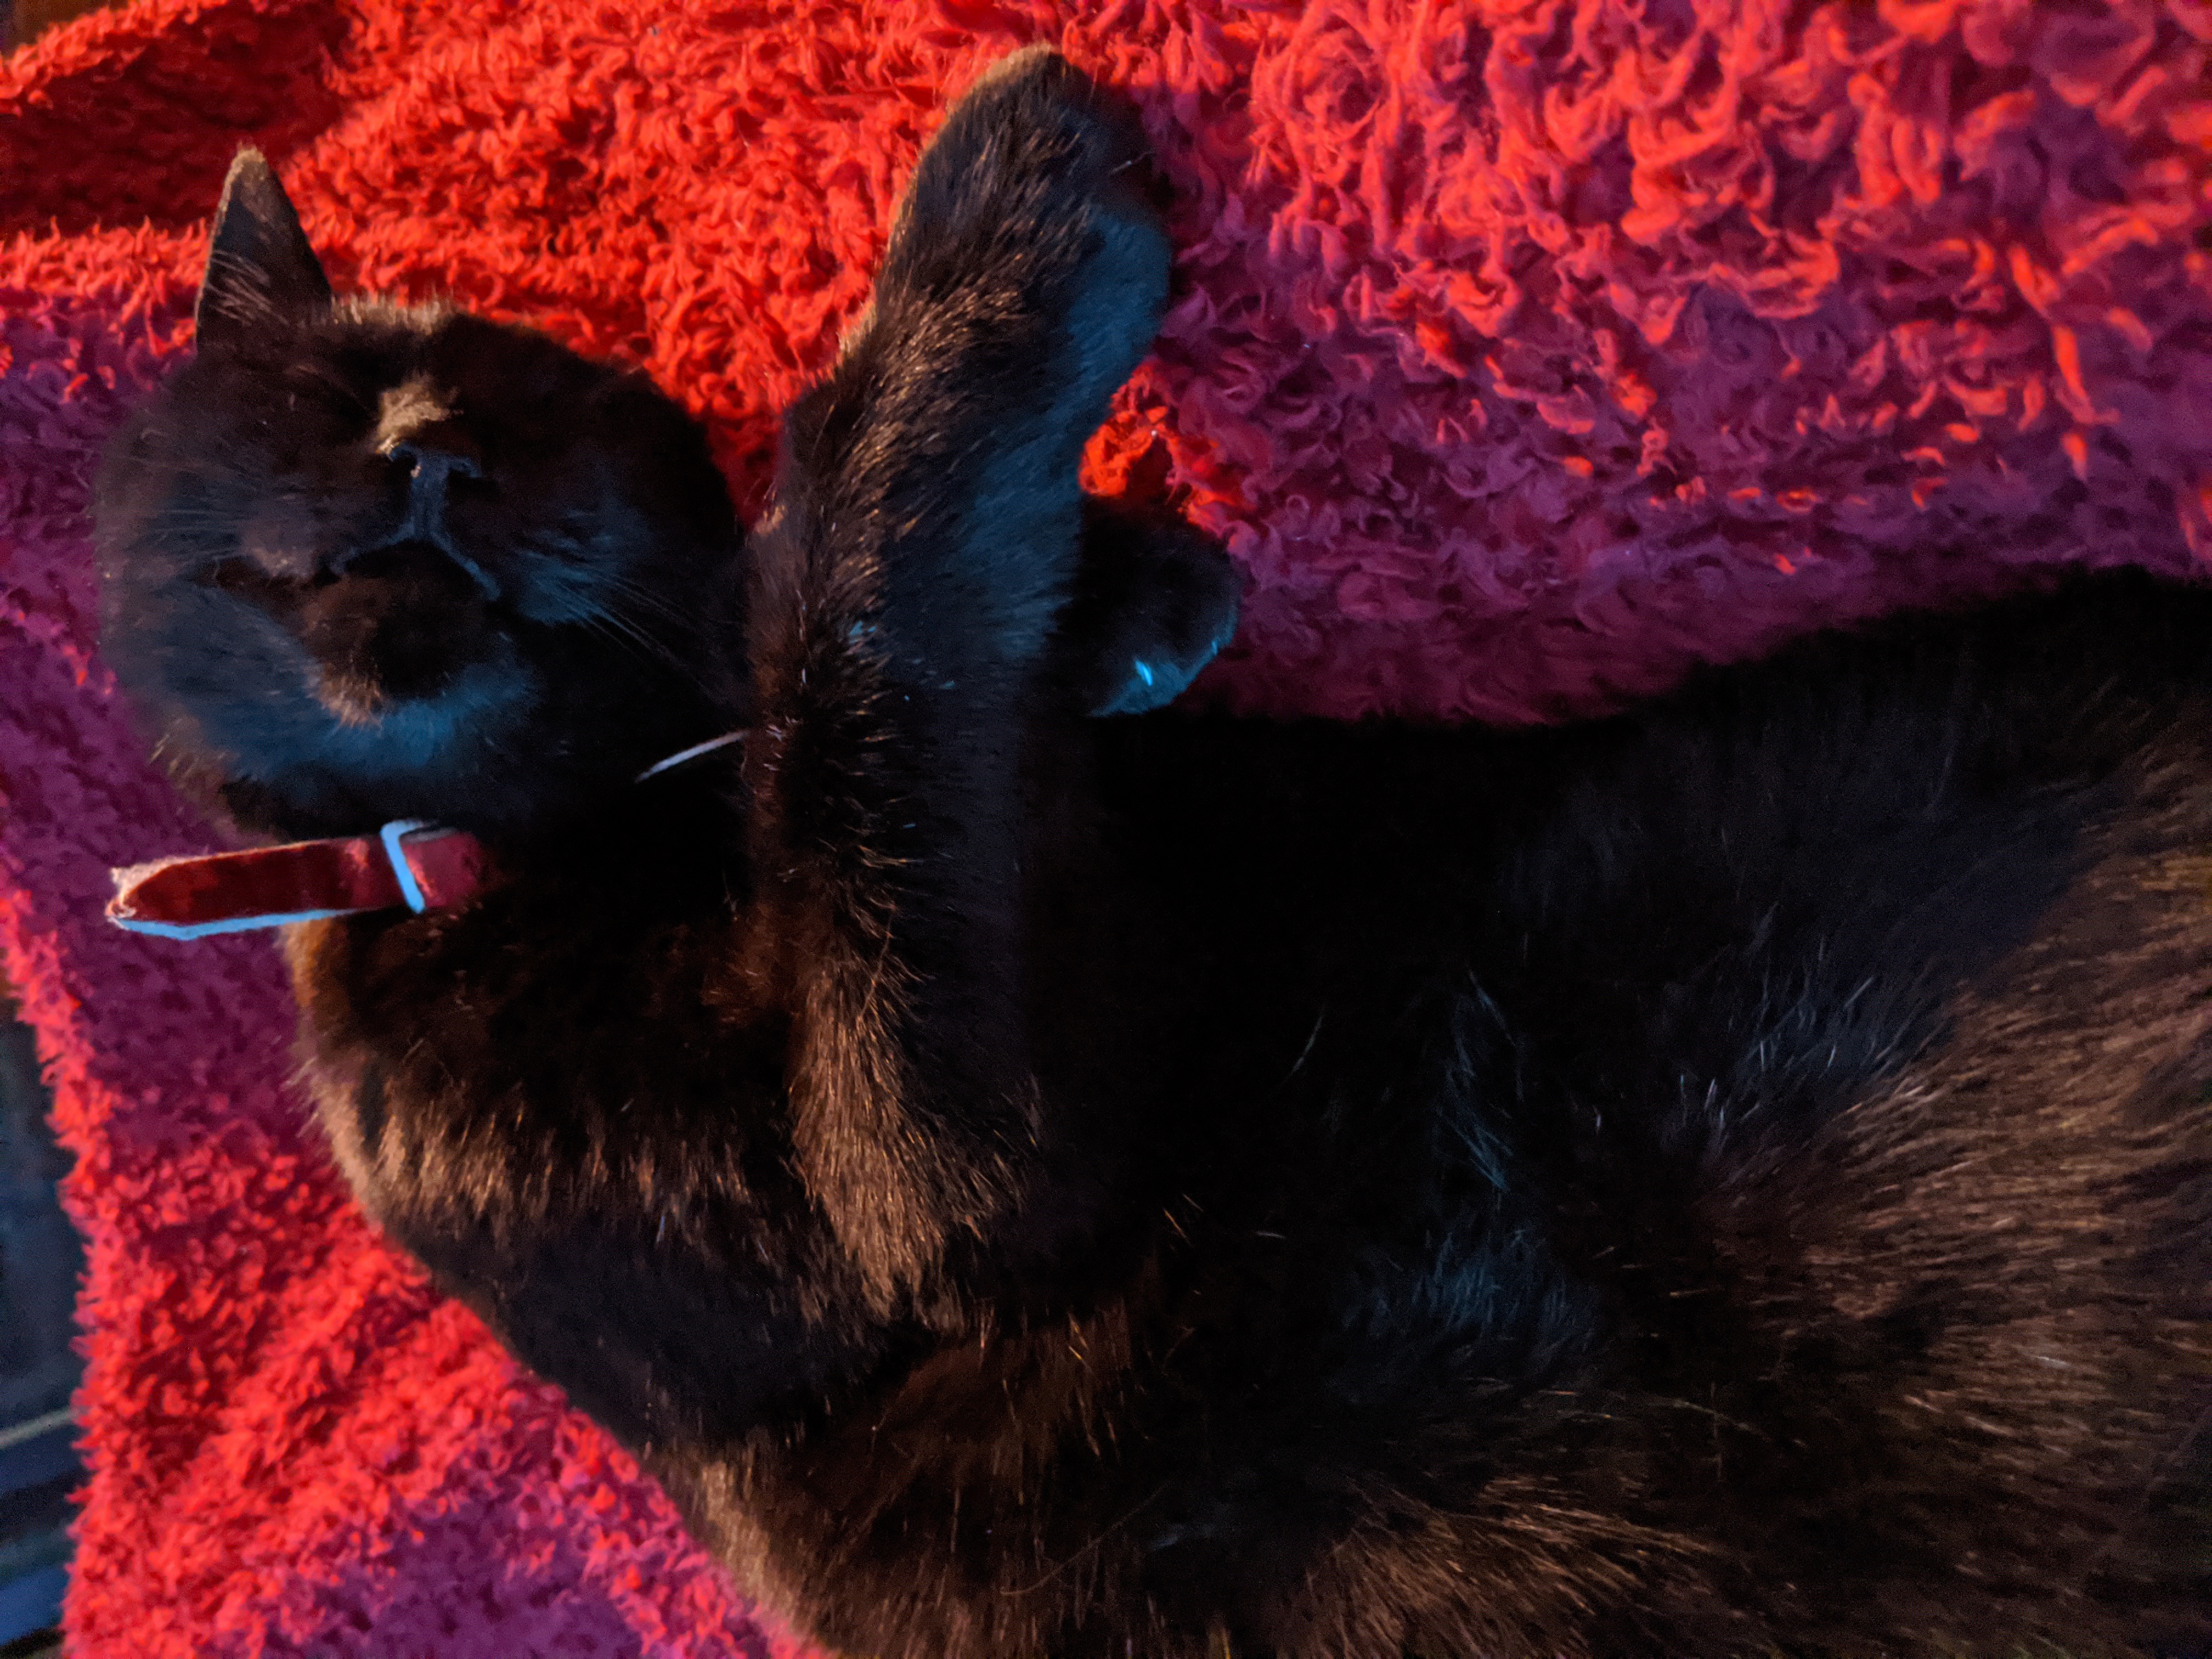 Black cat lying sleepily on his side, snuggling into Jamie's leg